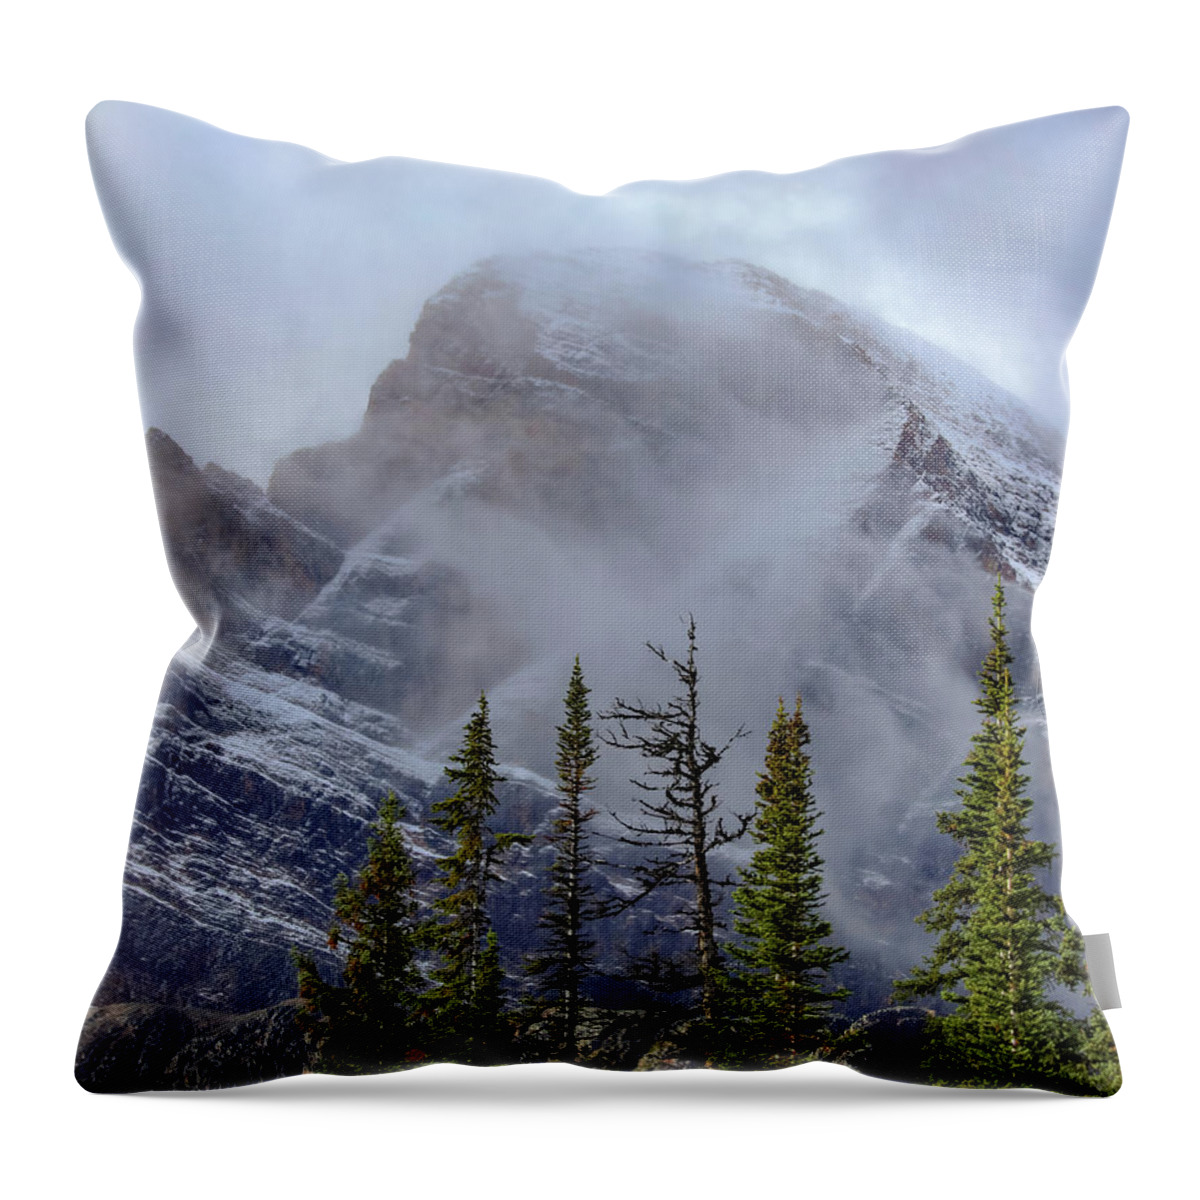 Evergreen Mountain Peak Throw Pillow featuring the photograph Evergreen Mountain Peak by Dan Sproul